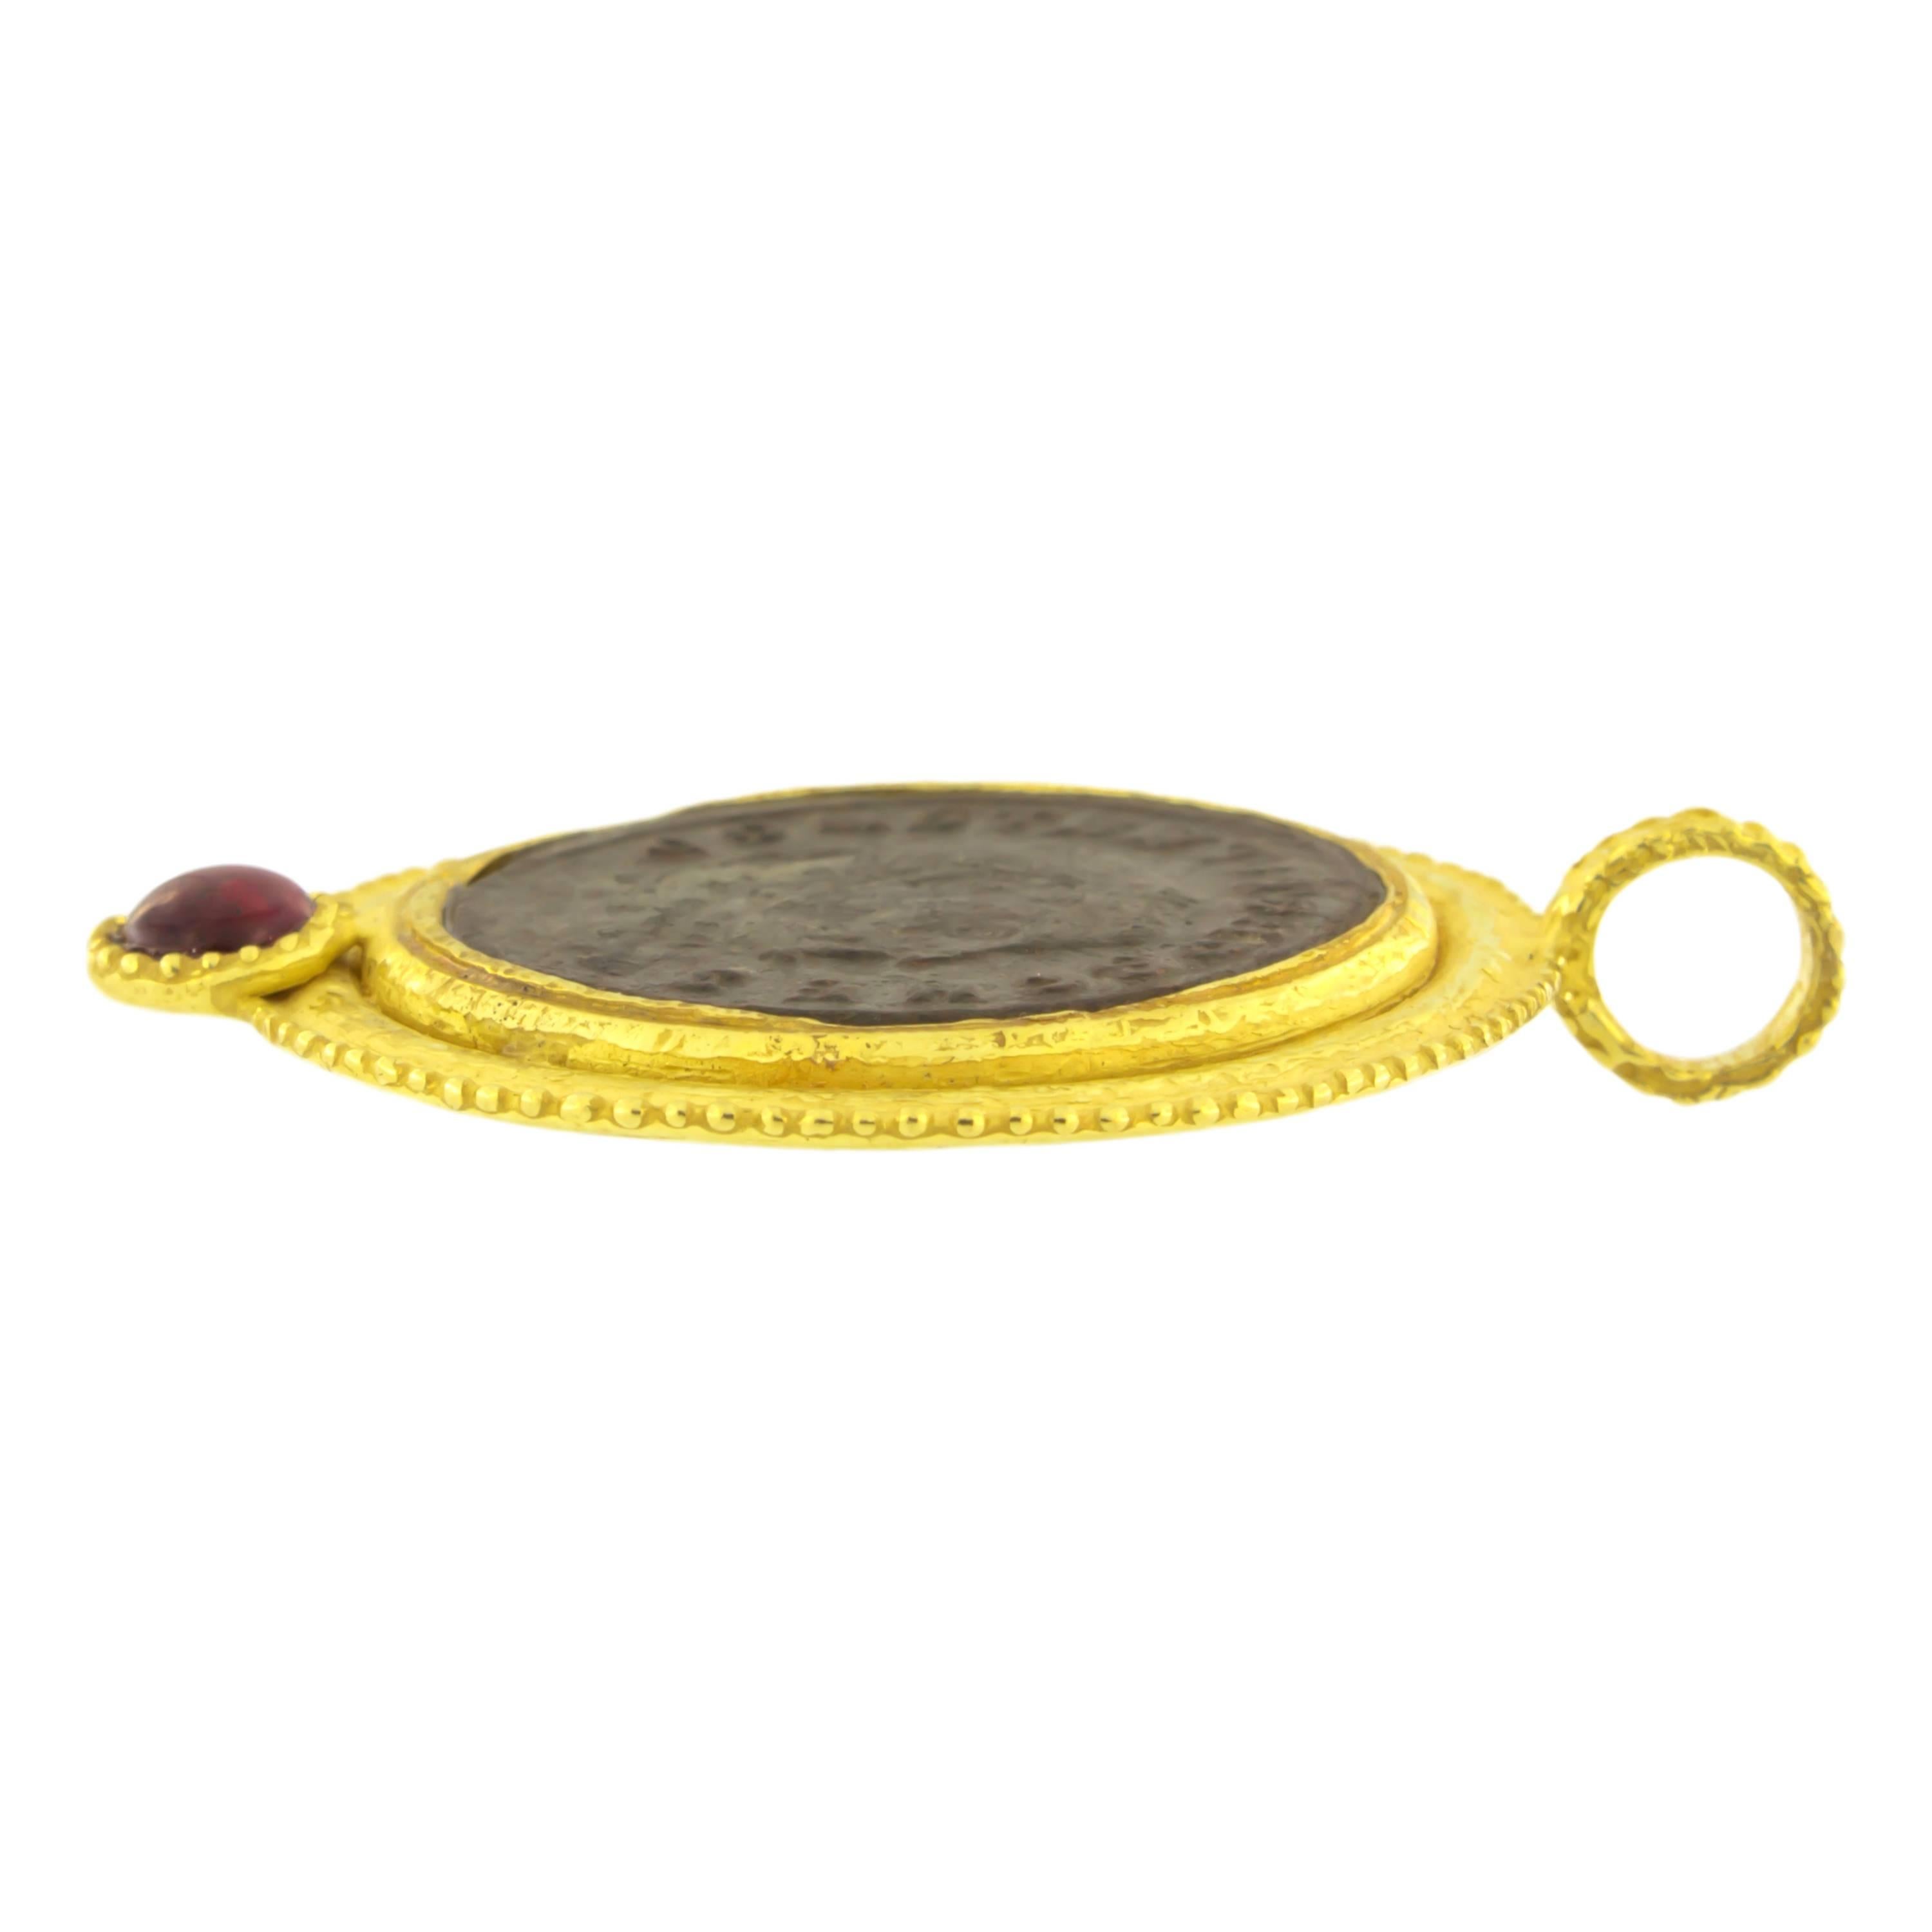 Sacchi Ancient Roman Coin and Tourmaline Gemstone 18k Yellow Gold ...